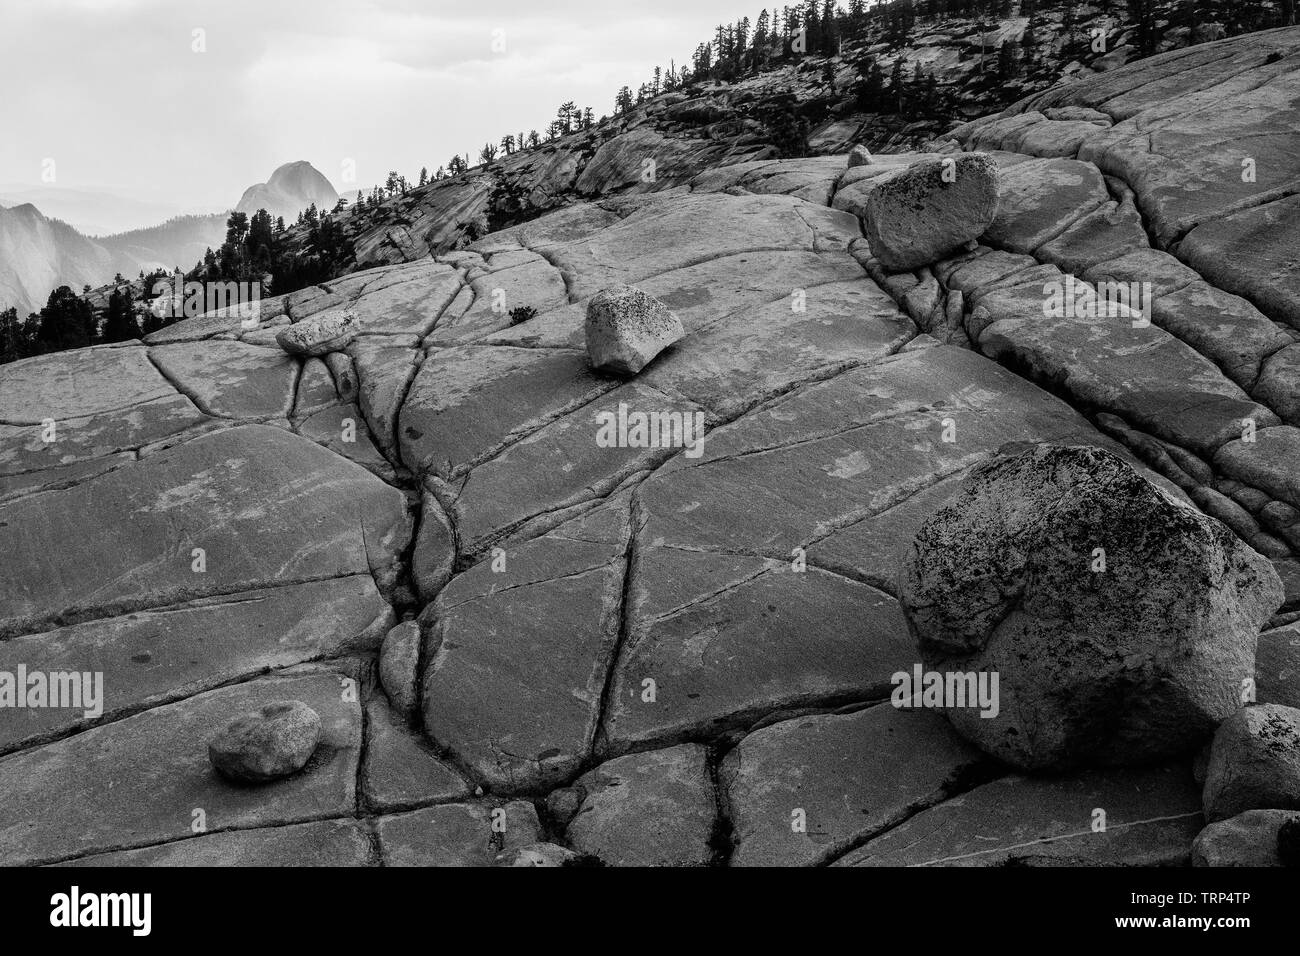 Tioga Pass Road,California, Lee Vining,Yosemite-Nationalpark,montagna,tree,pine, pietre,valley,Landschaftsaufnahme,schwarz/Weiss Foto Stock